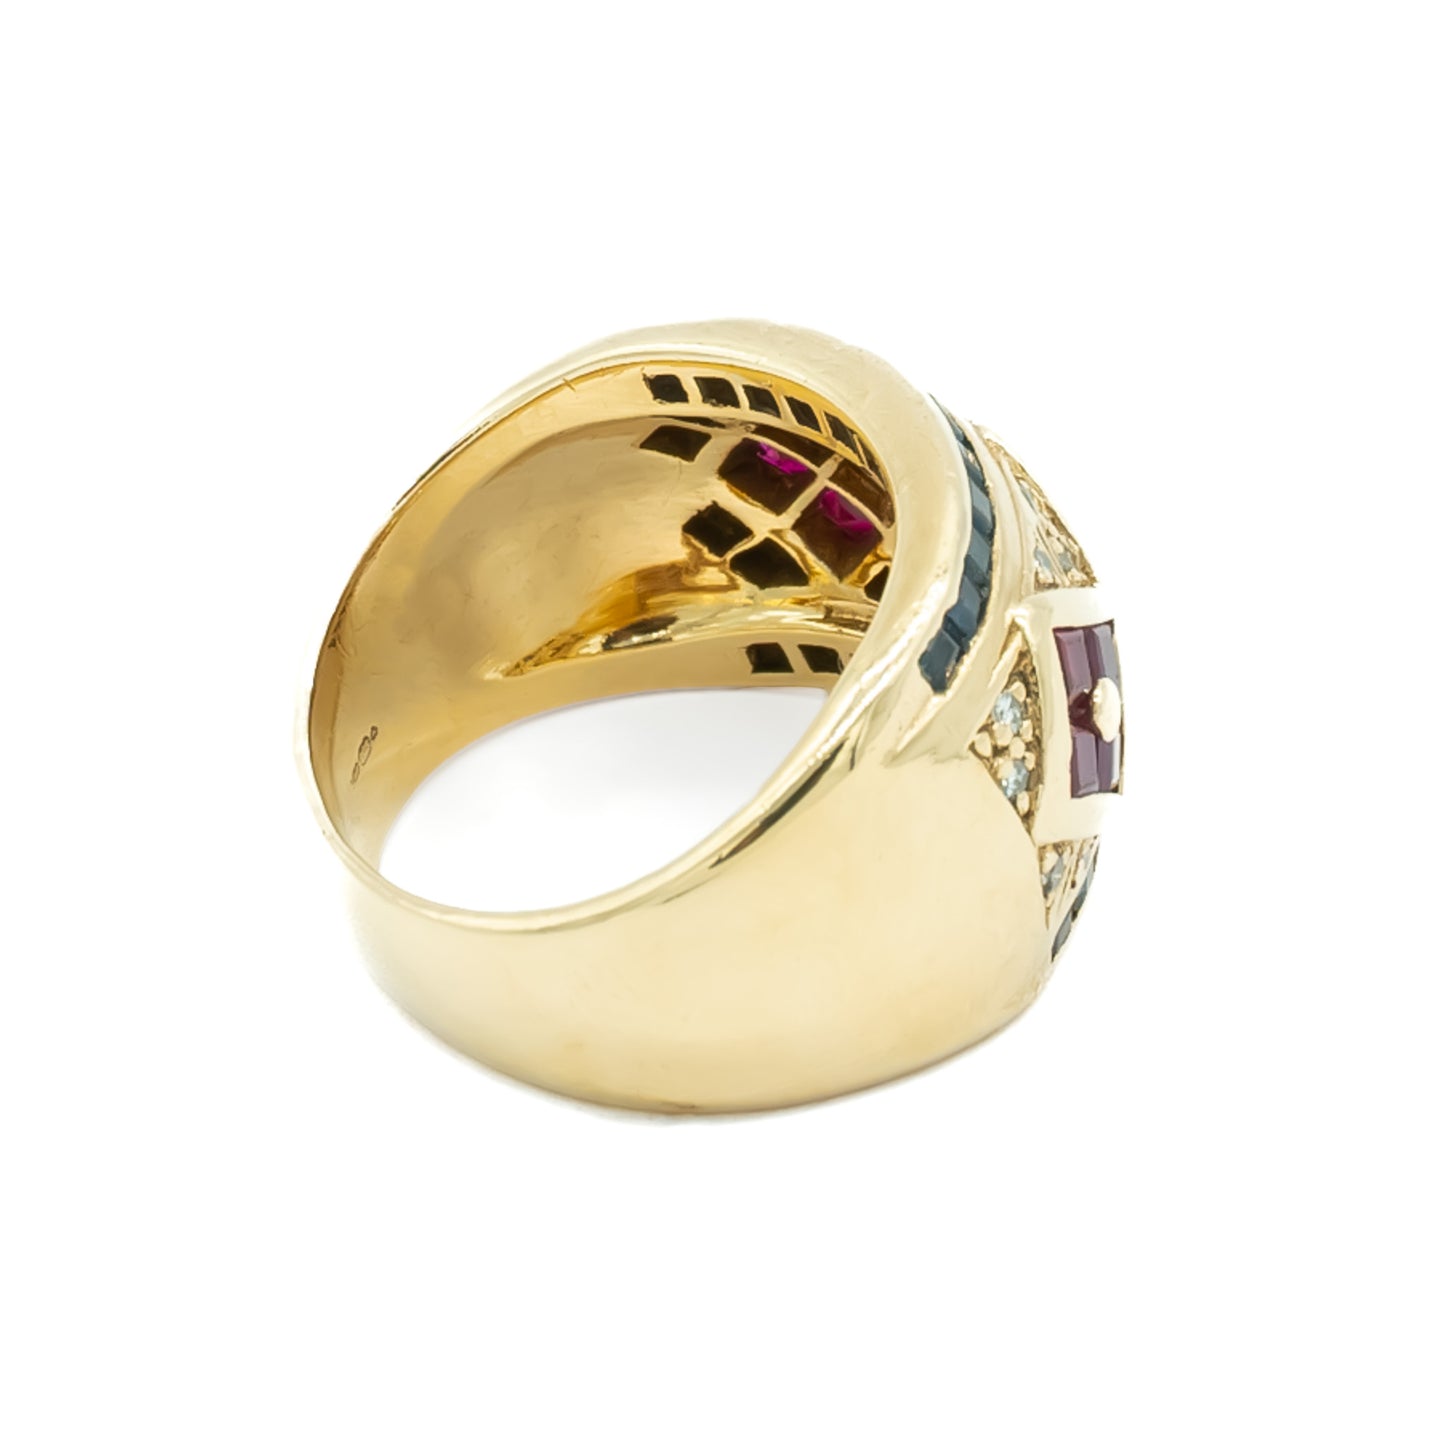 Stunning 9ct yellow gold ring set with twelve square rubies, twenty-two rectangular sapphires and twenty small diamonds.